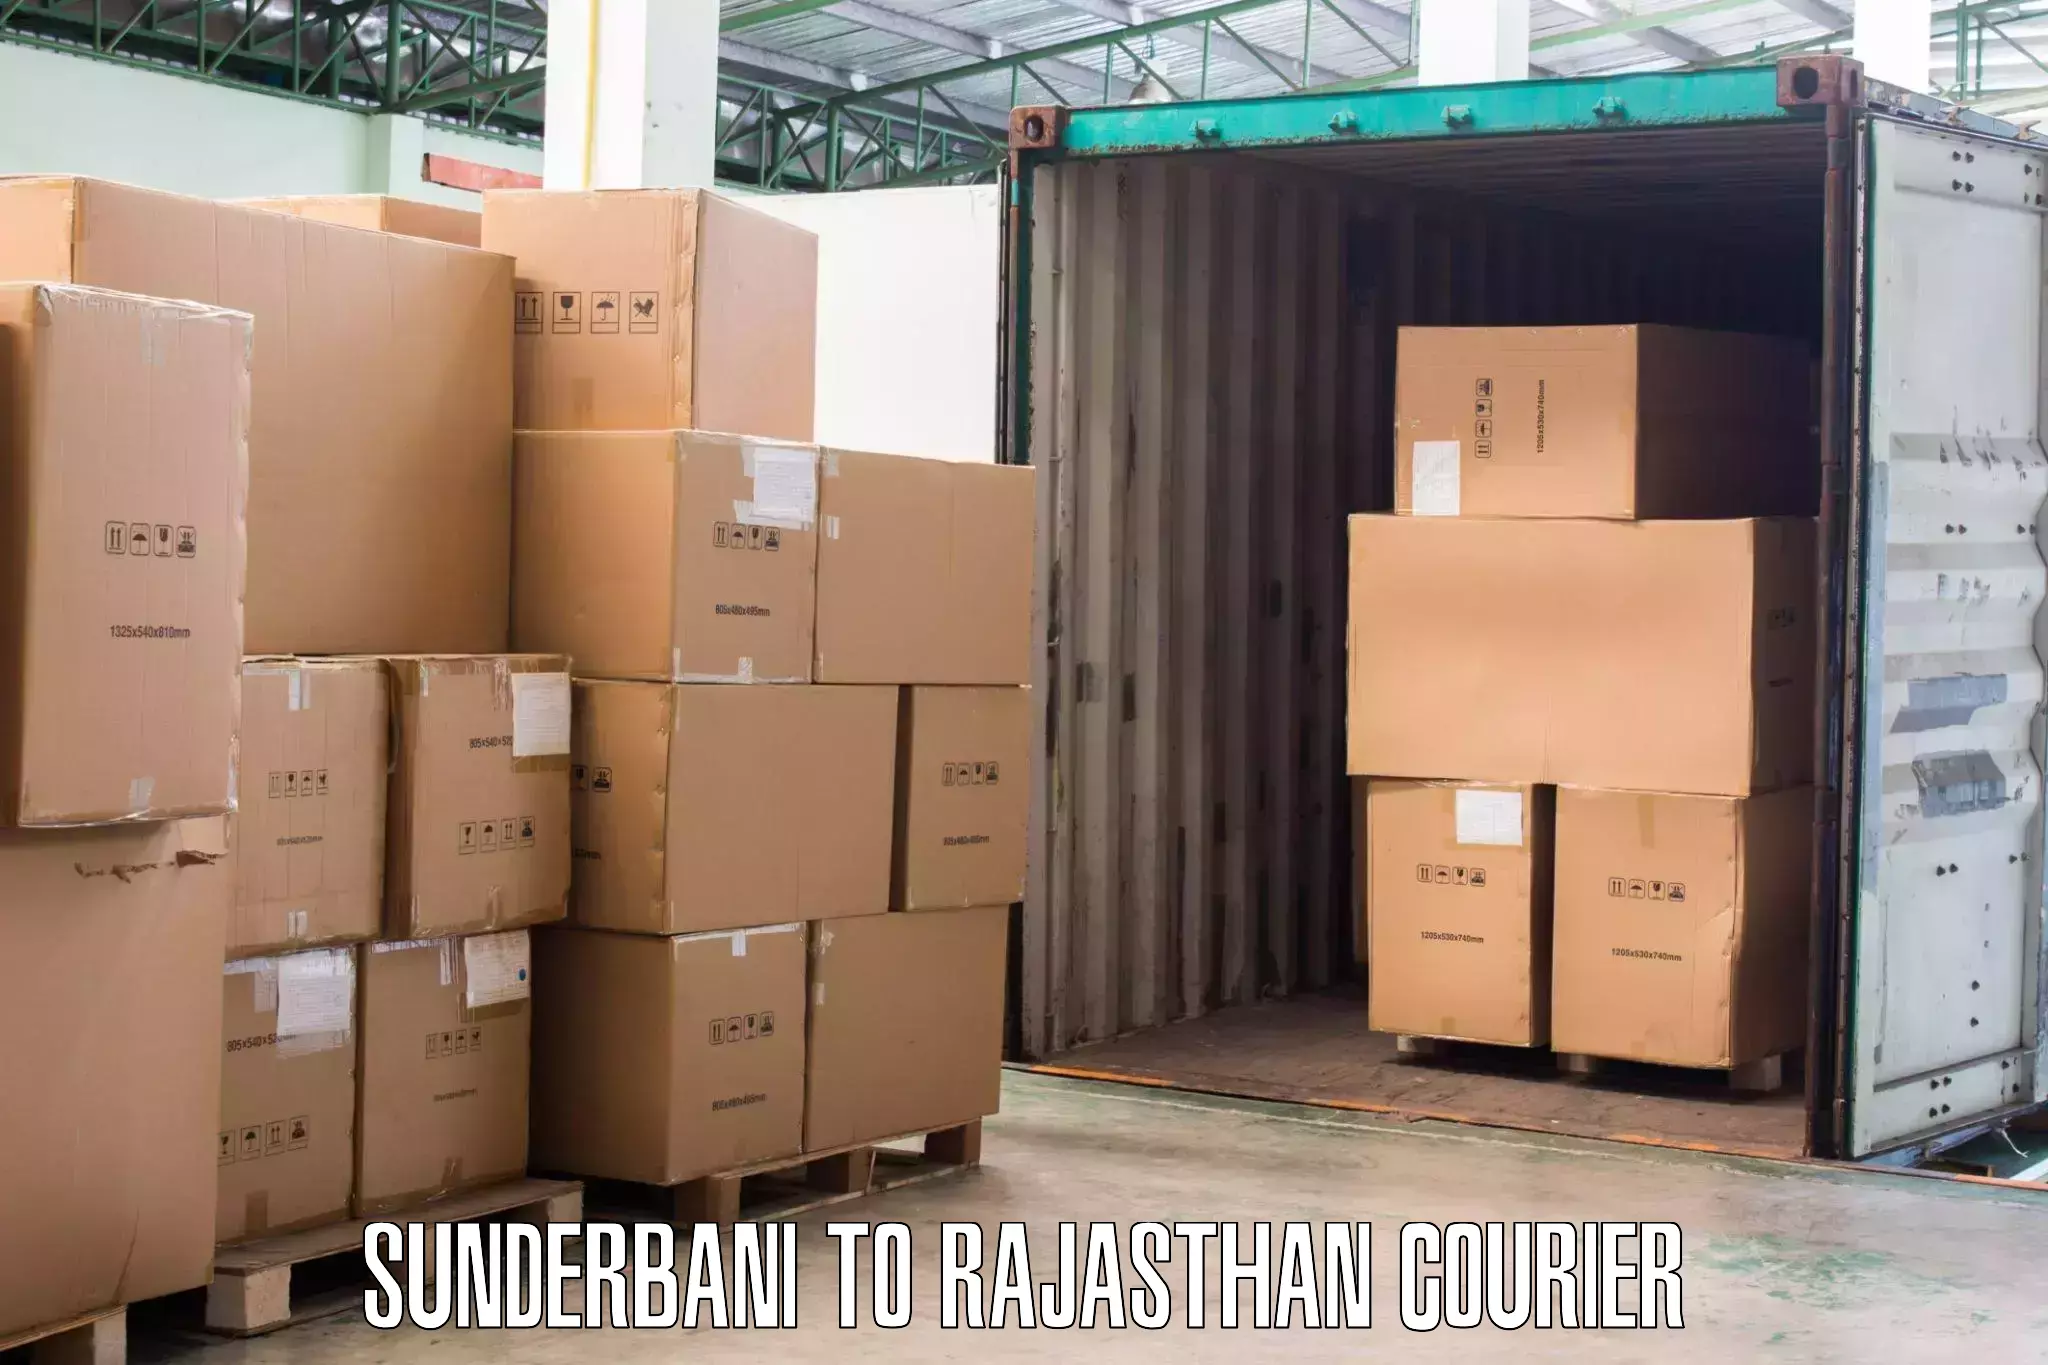 Moving and packing experts Sunderbani to Morkheri